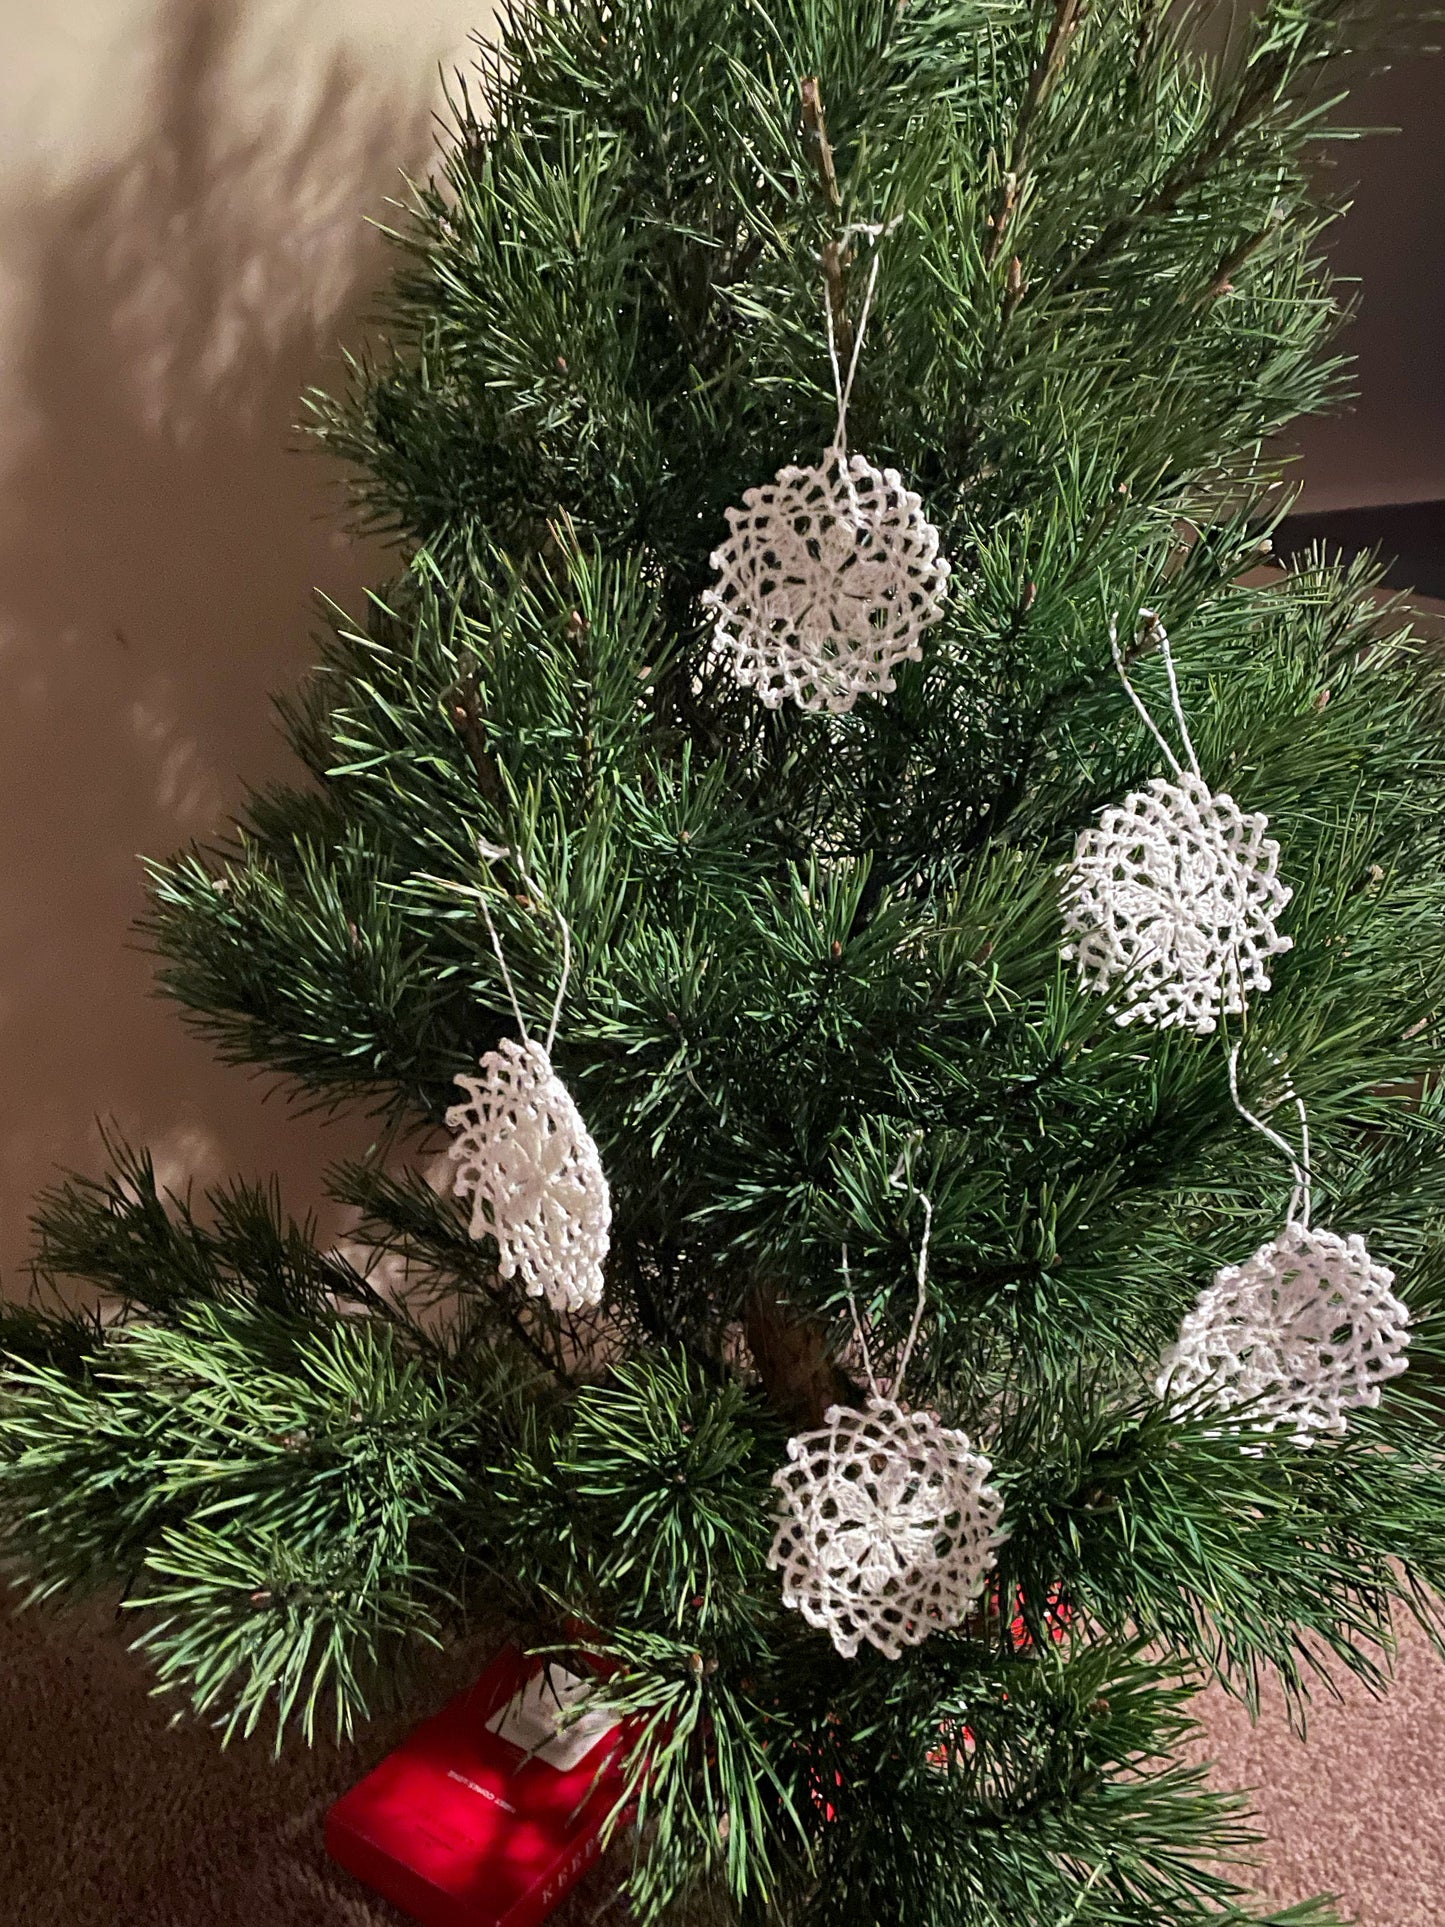 Antique Snowflake Ornaments